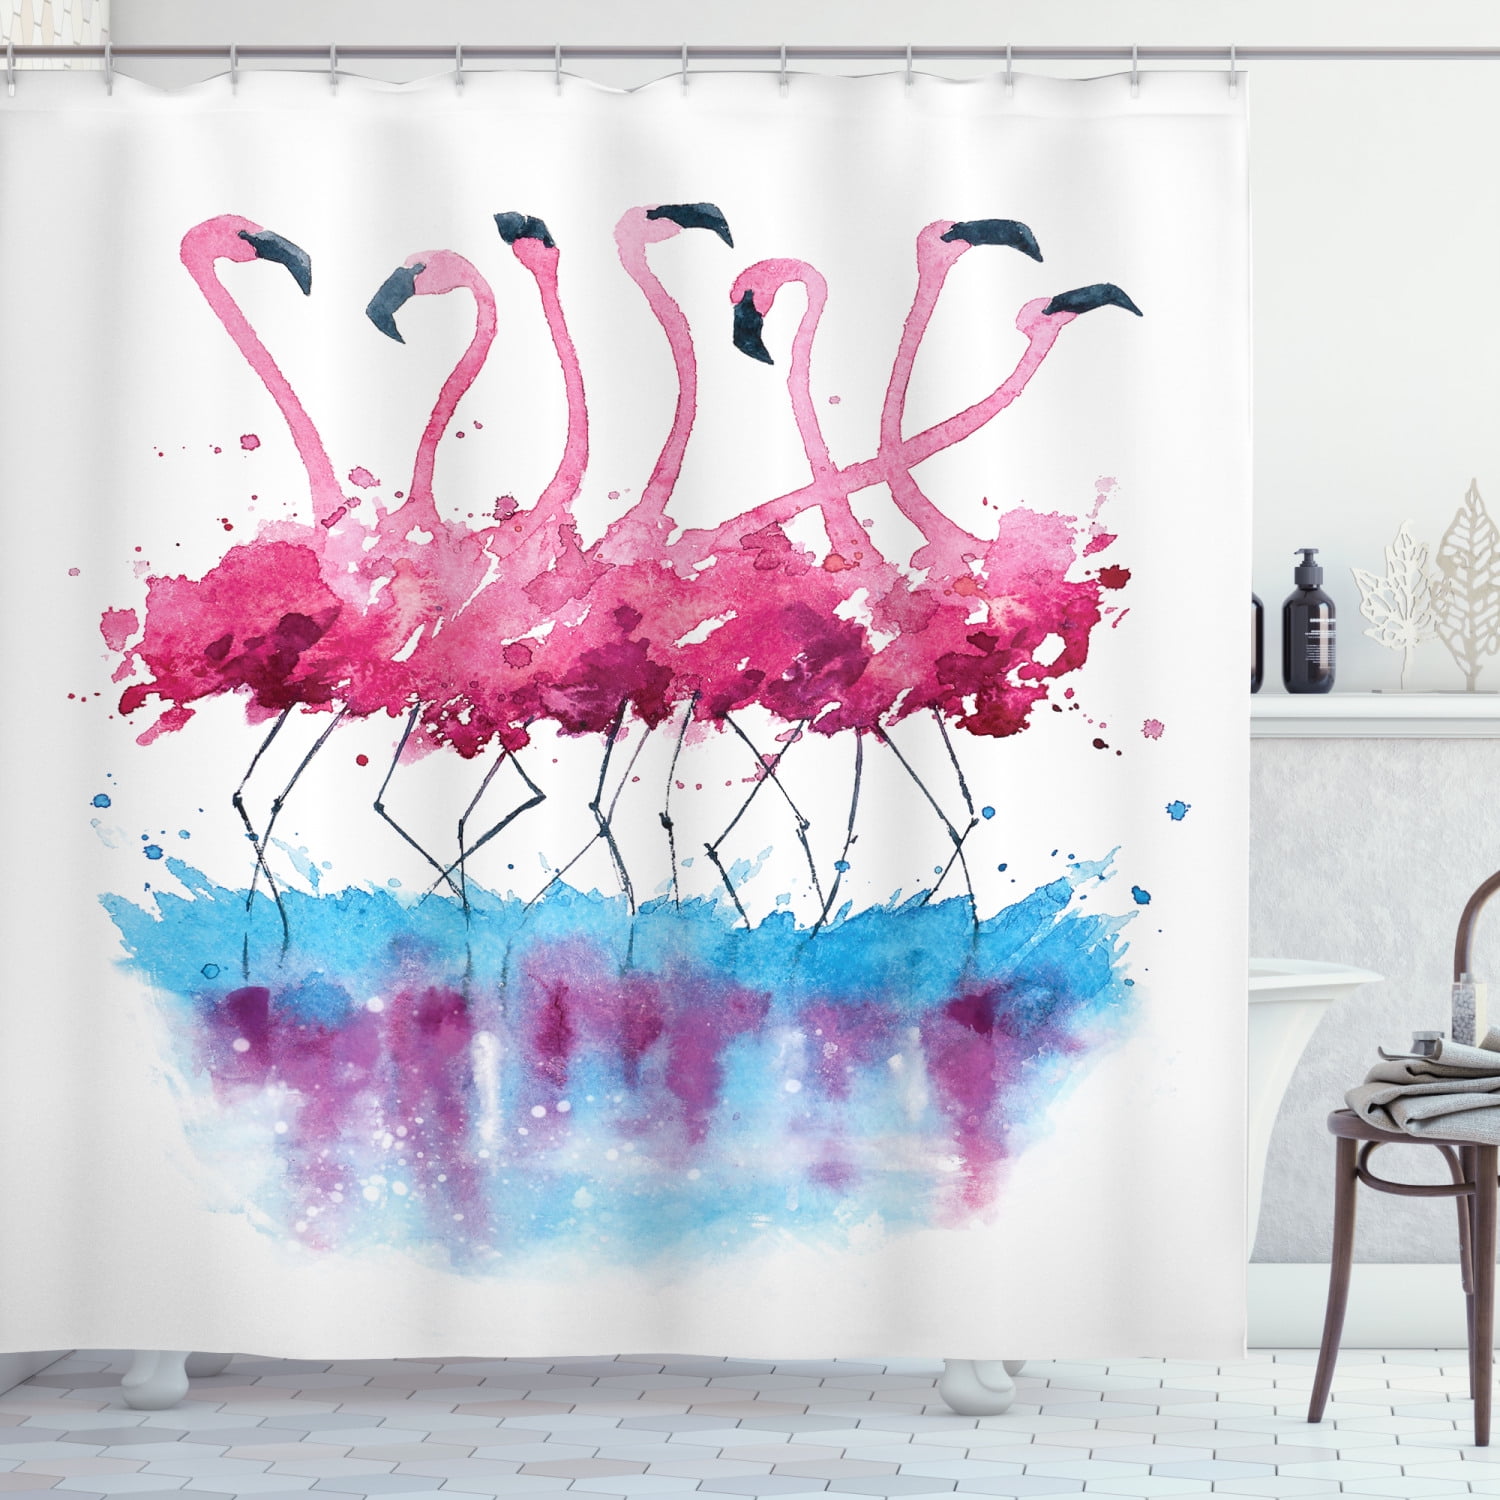 72" Waterproof Bathroom Set Shower Curtain  Watercolor Flamingo Heart Leaf Hooks 